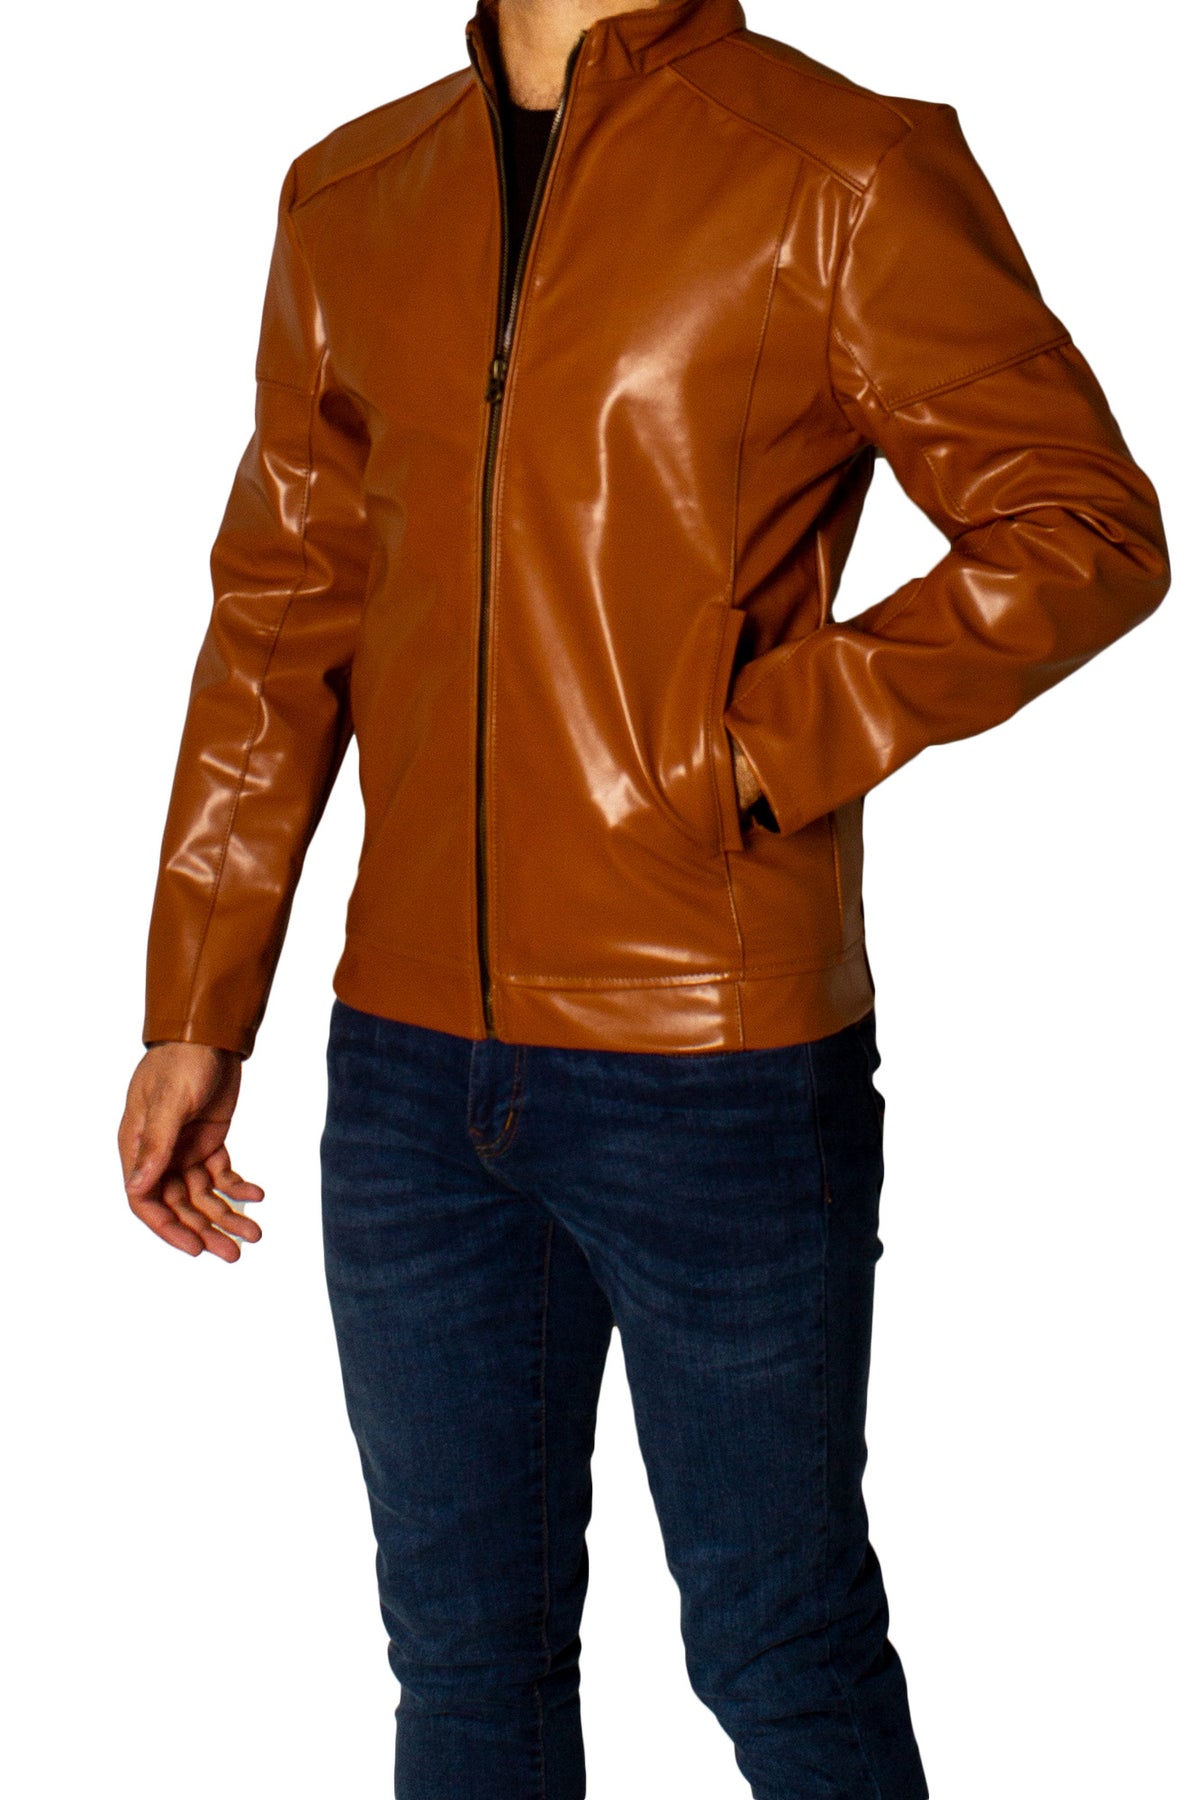 Men's Faux Leather Jacket Jk-0316 Camel